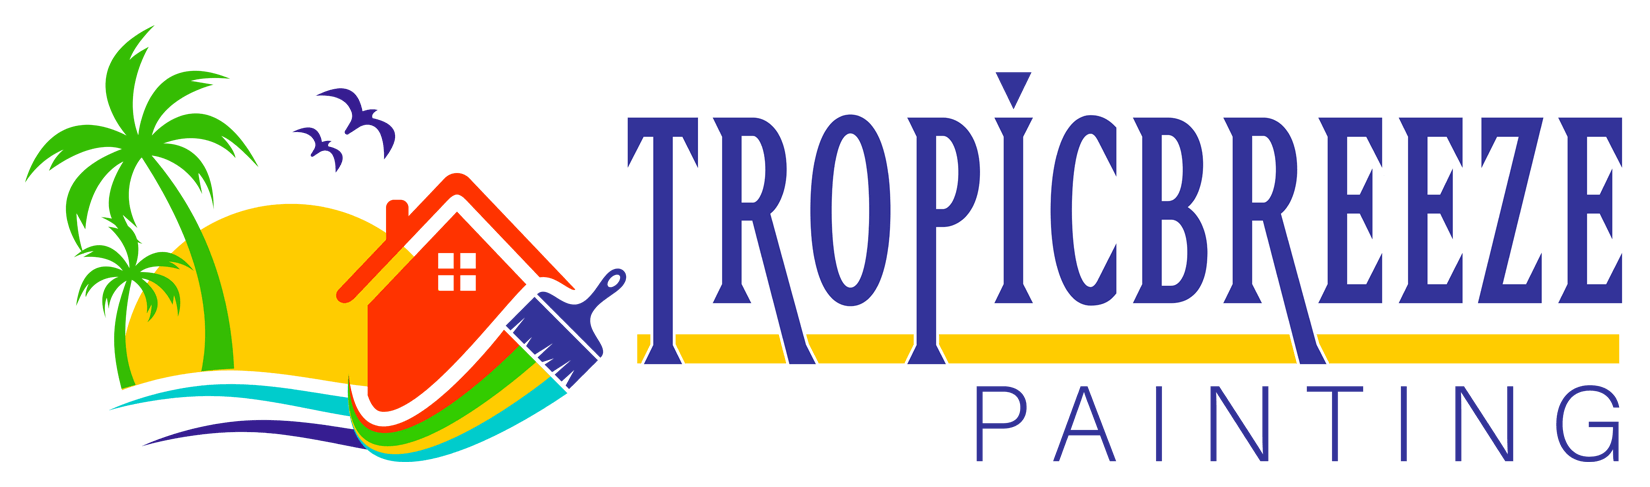 Tropic Breeze Painting logo.